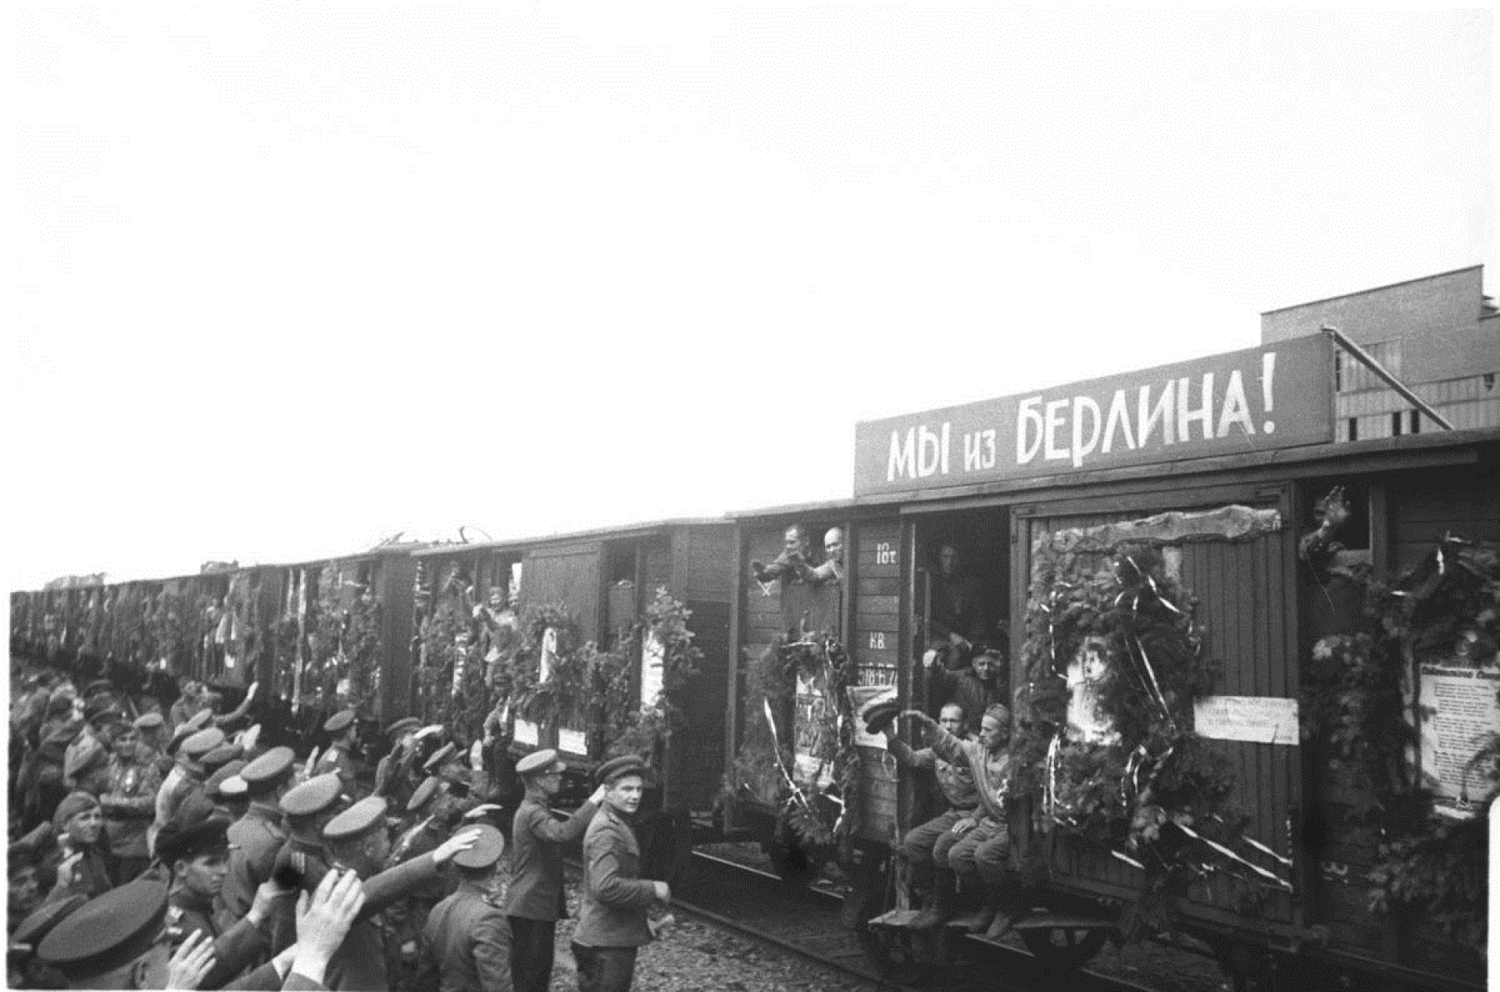 Поезд из Берлина 1945. Эшелон Победы 1945. Солдаты возвращаются домой 1945. ВОВ поезд из Берлина победа. 9 мая вокзал